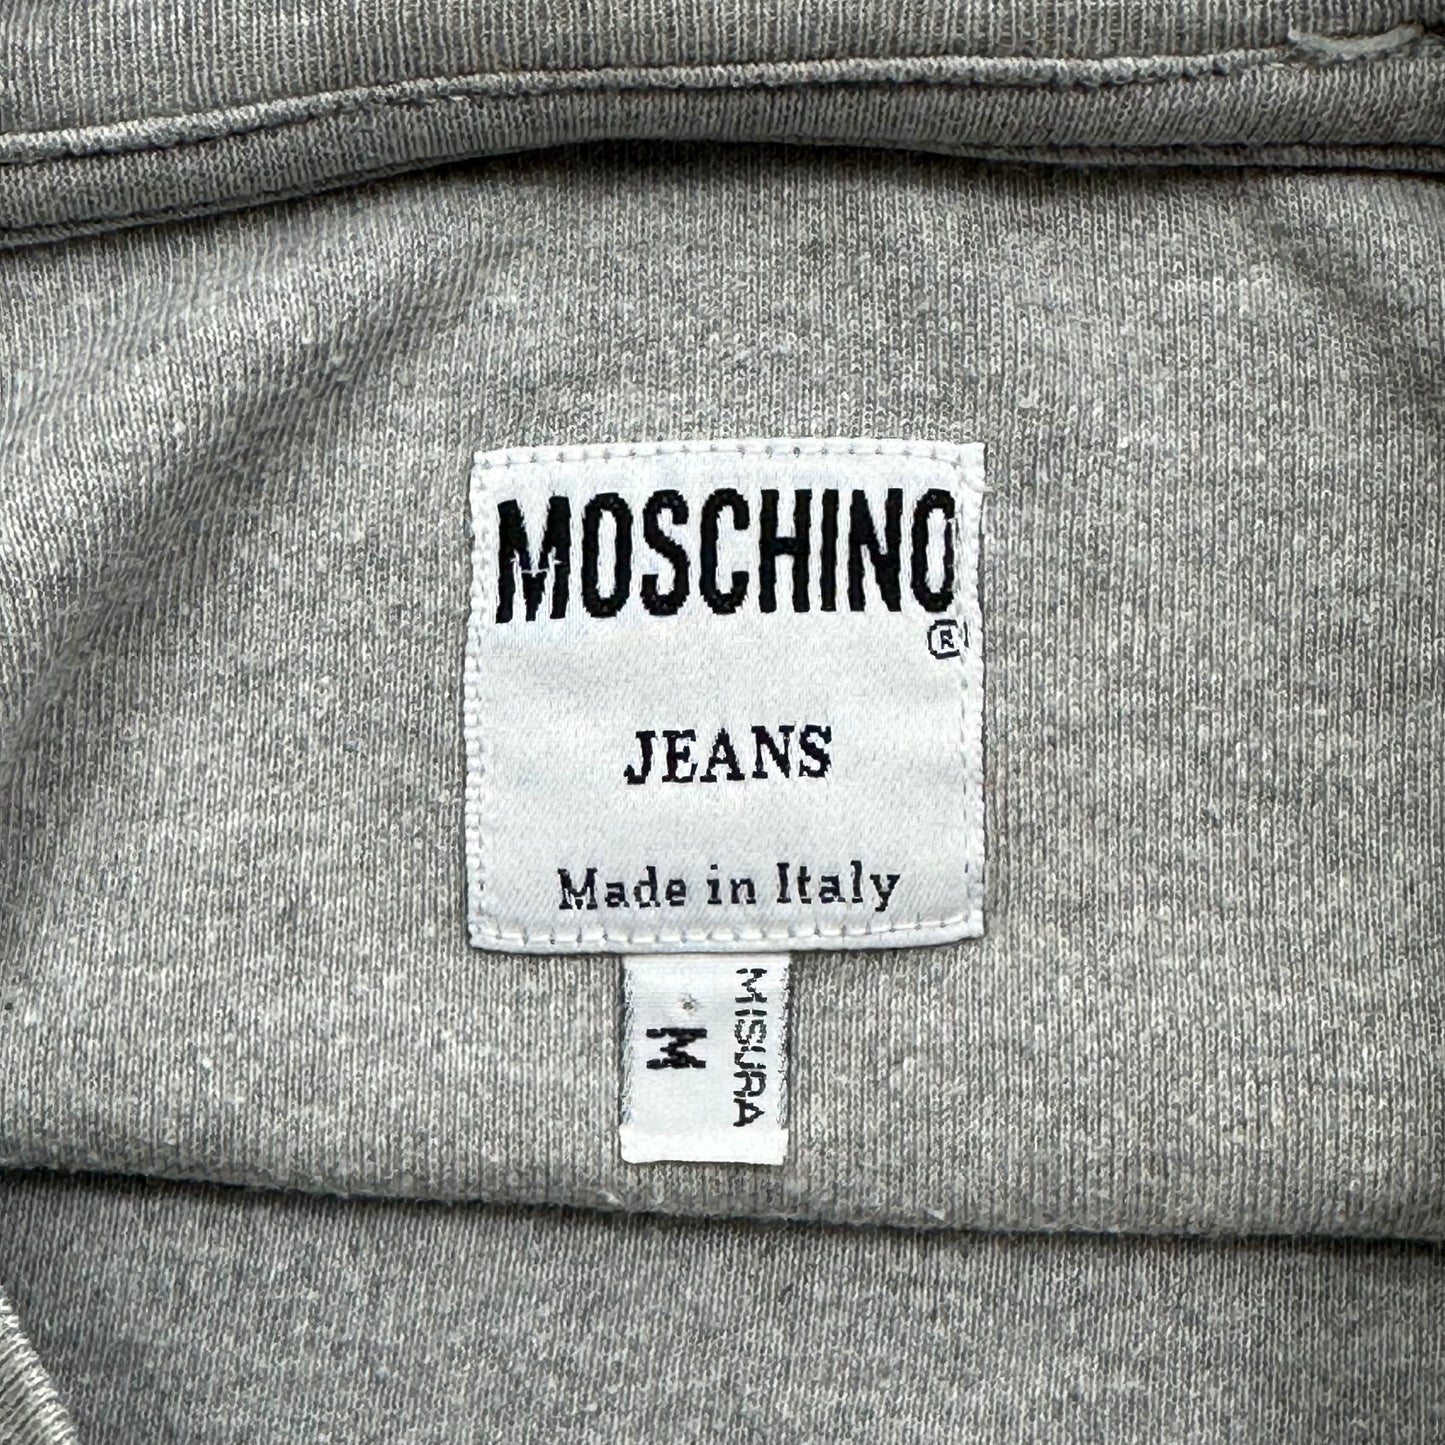 Moschino Jeans 90’s Yin Yang Crewneck - M/L